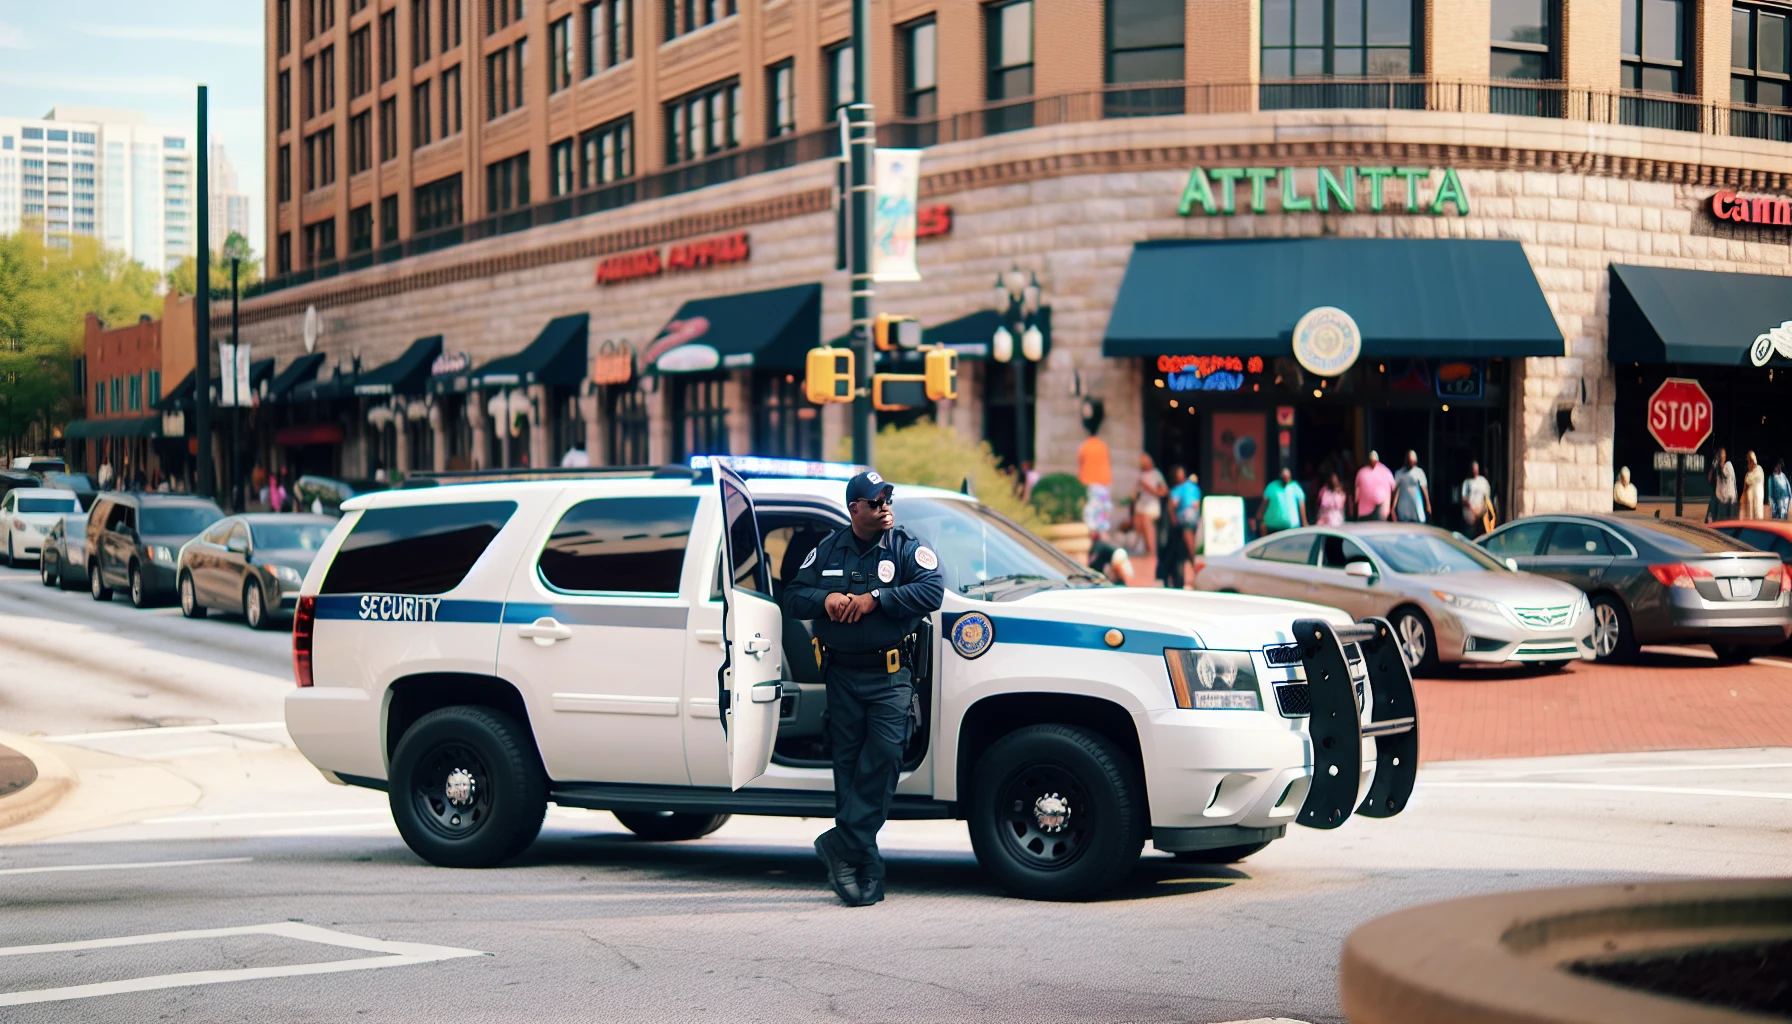 Security patrol vehicle monitoring a business location in Atlanta, GA